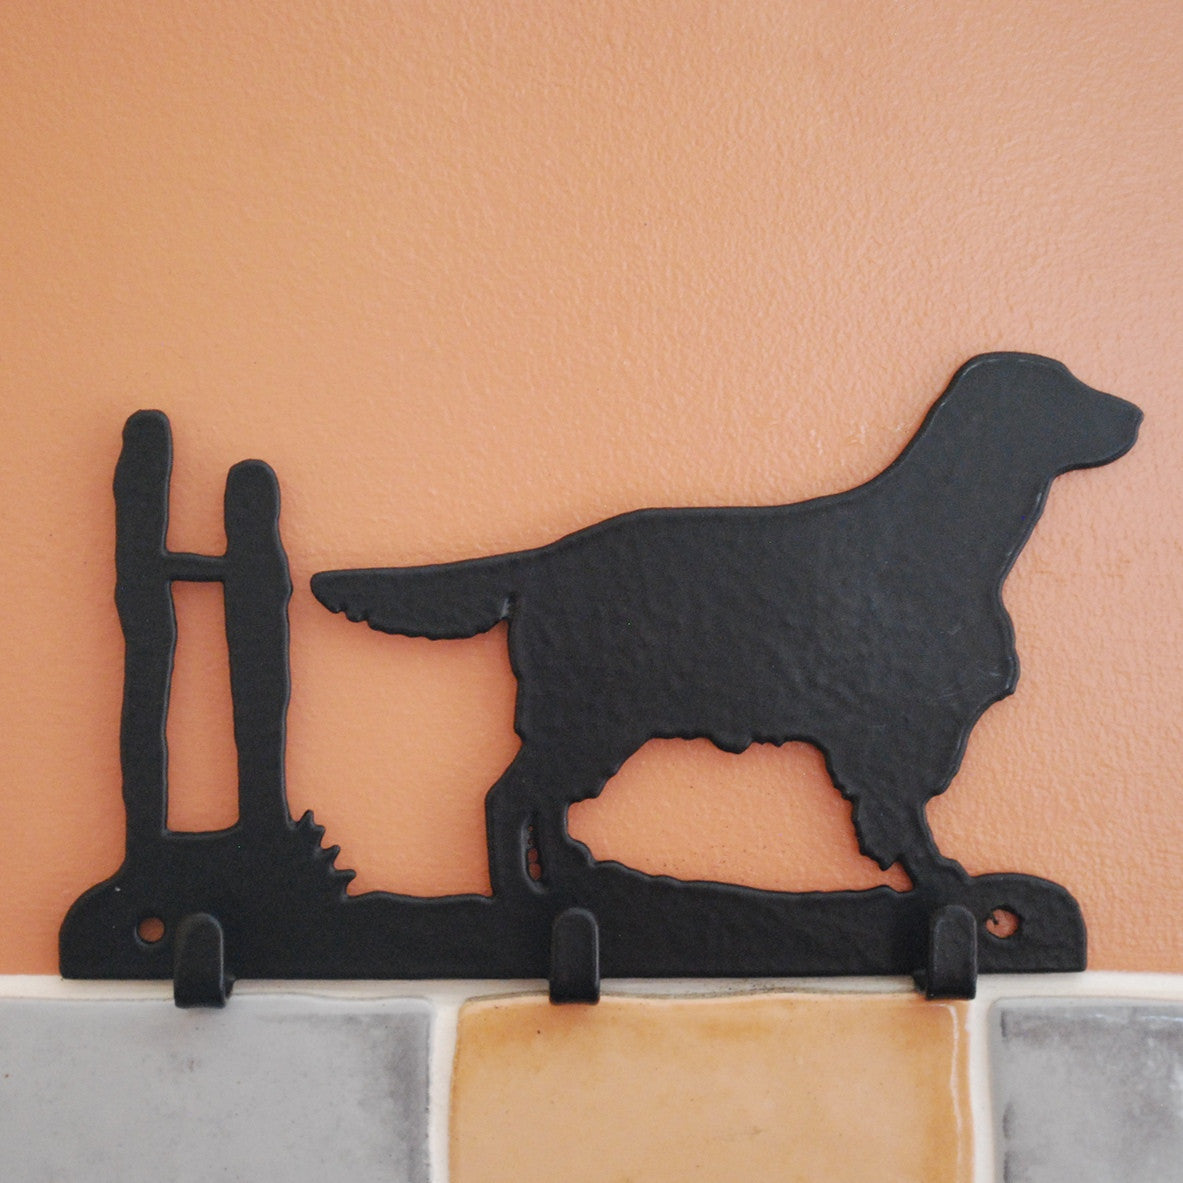 Lhaso Apso Dog Key Racks - 3 Hooks - Fernie's Choice Classic Country Wear for Dogs